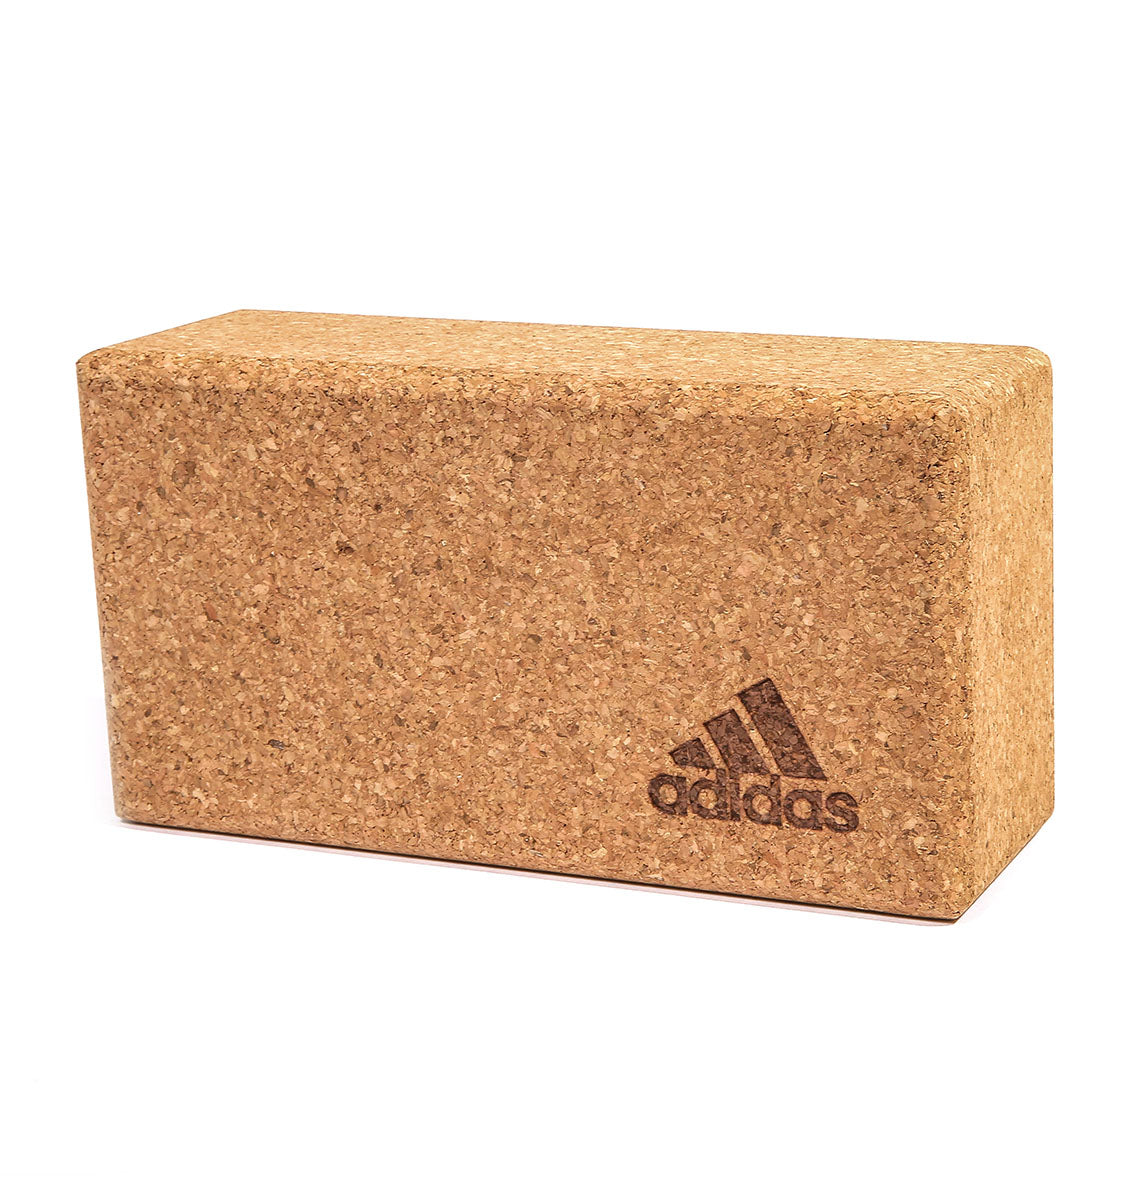 adidas Cork Yoga Block - 2